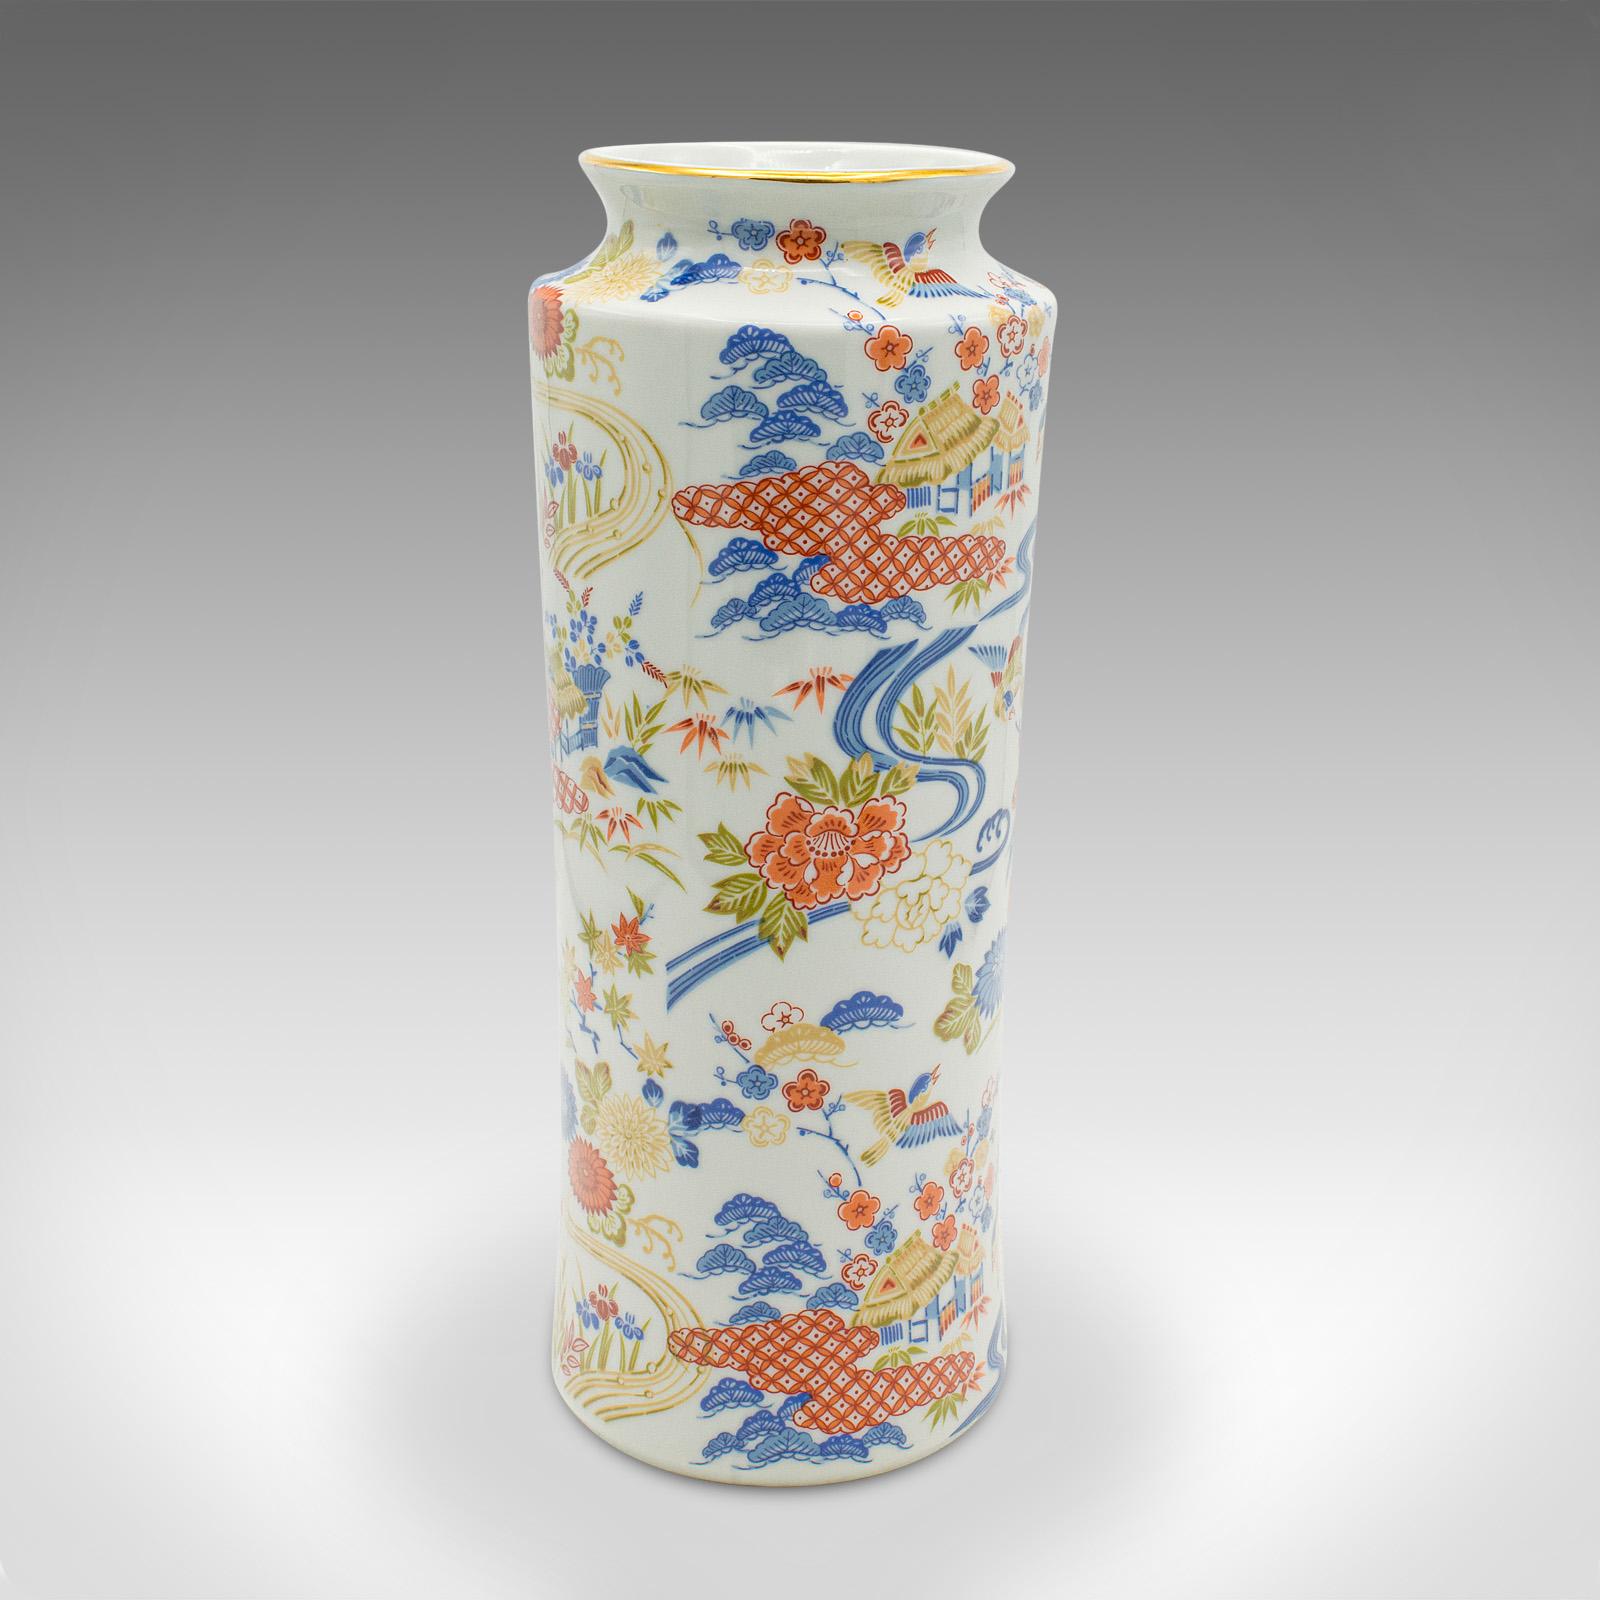 20th Century Vintage Decorative Flower Vase, Chinese, Ceramic, Stem Sleeve, Art Deco Revival For Sale